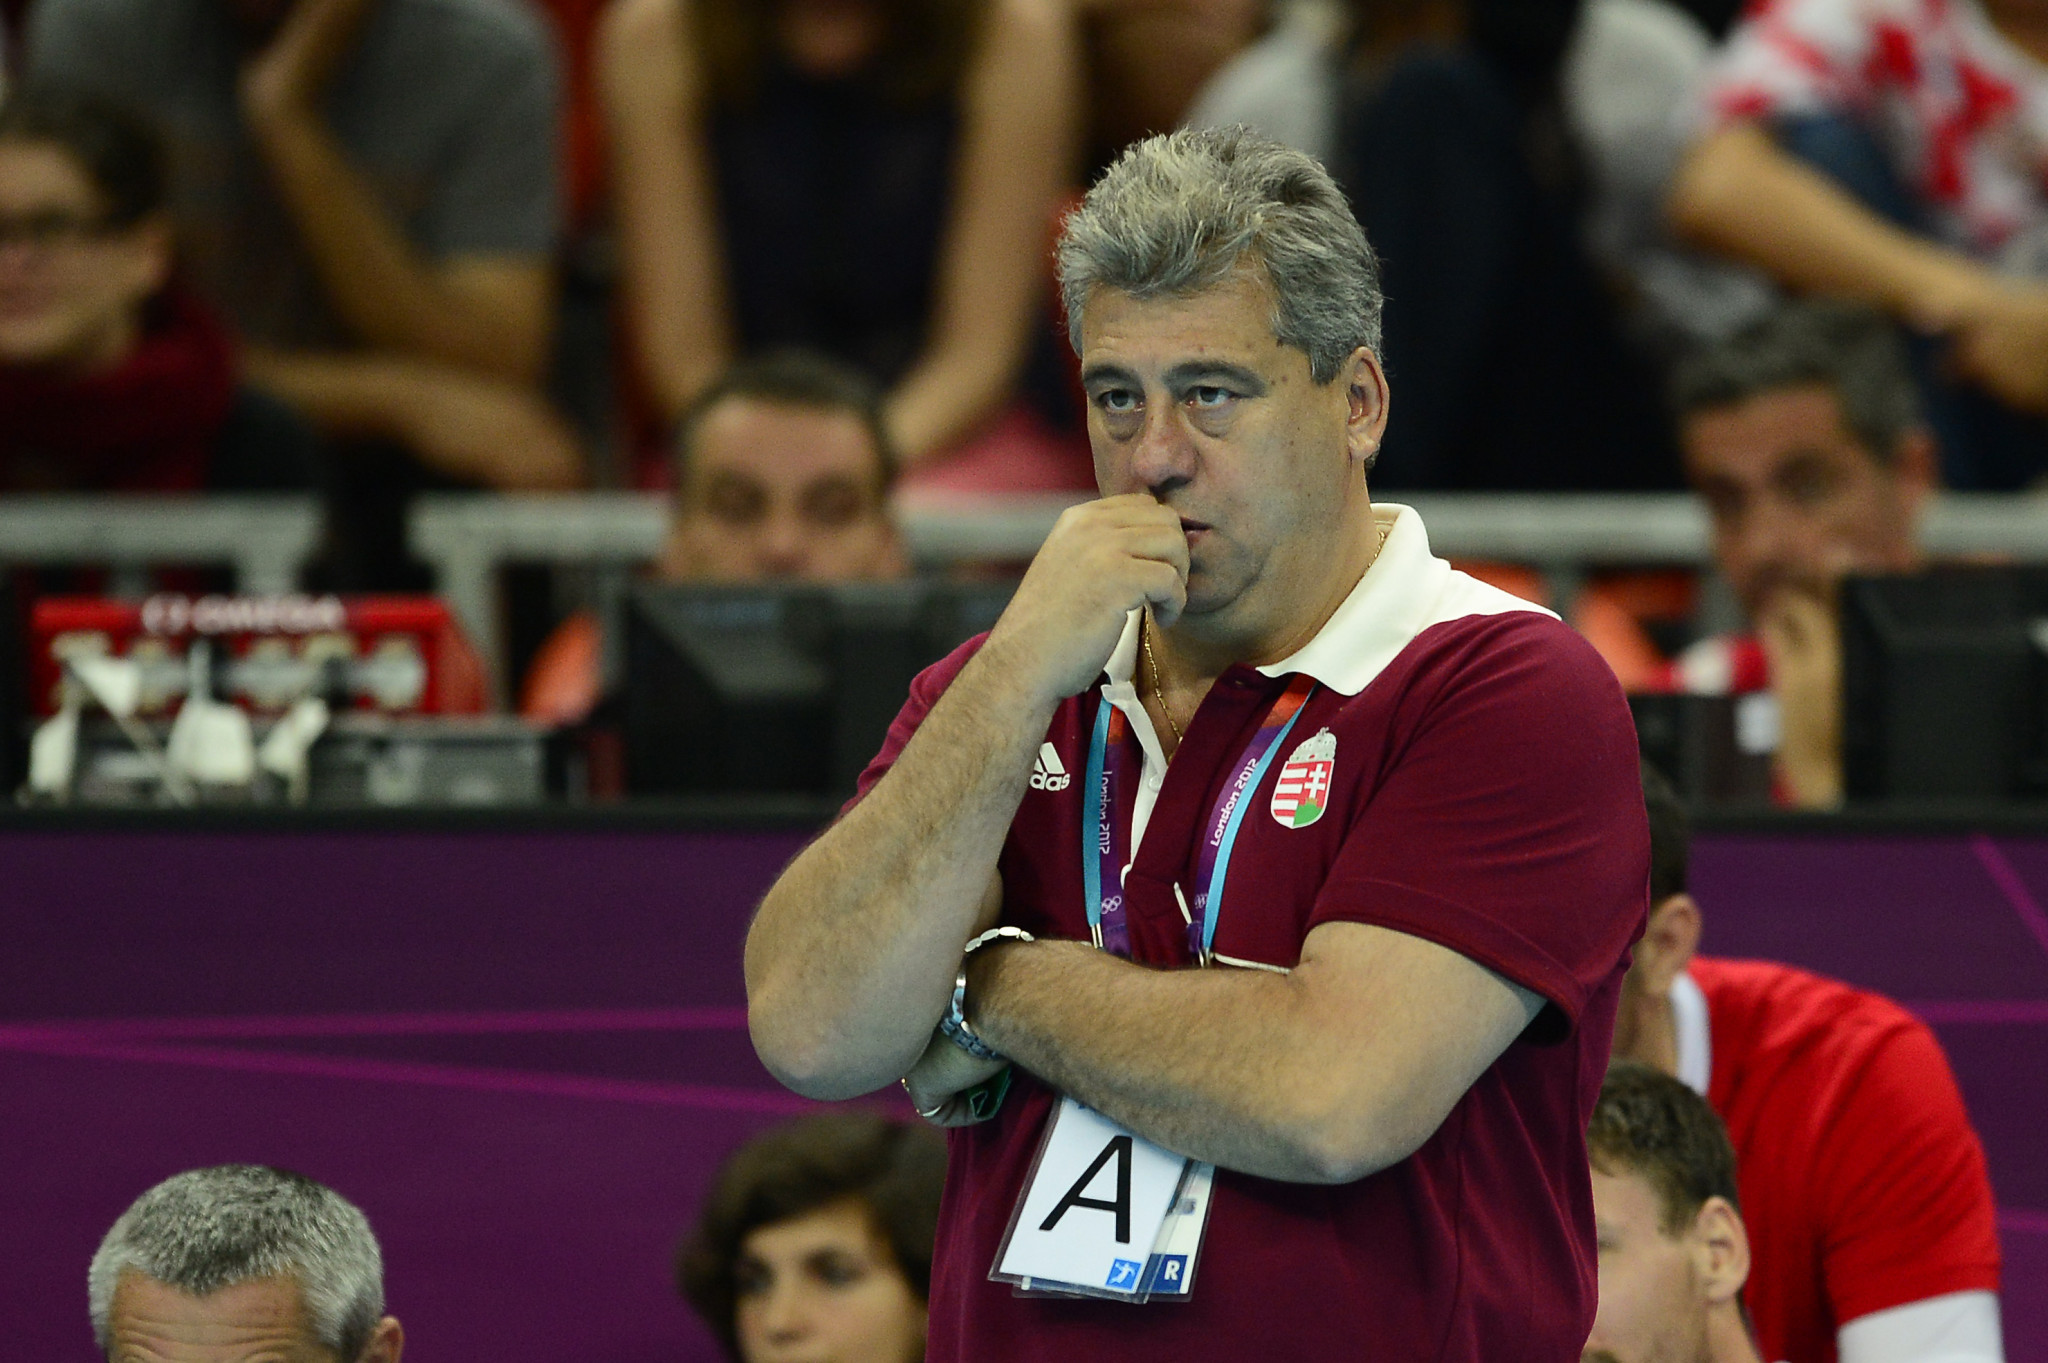 Former Hungarian national handball coach named President of HUSF